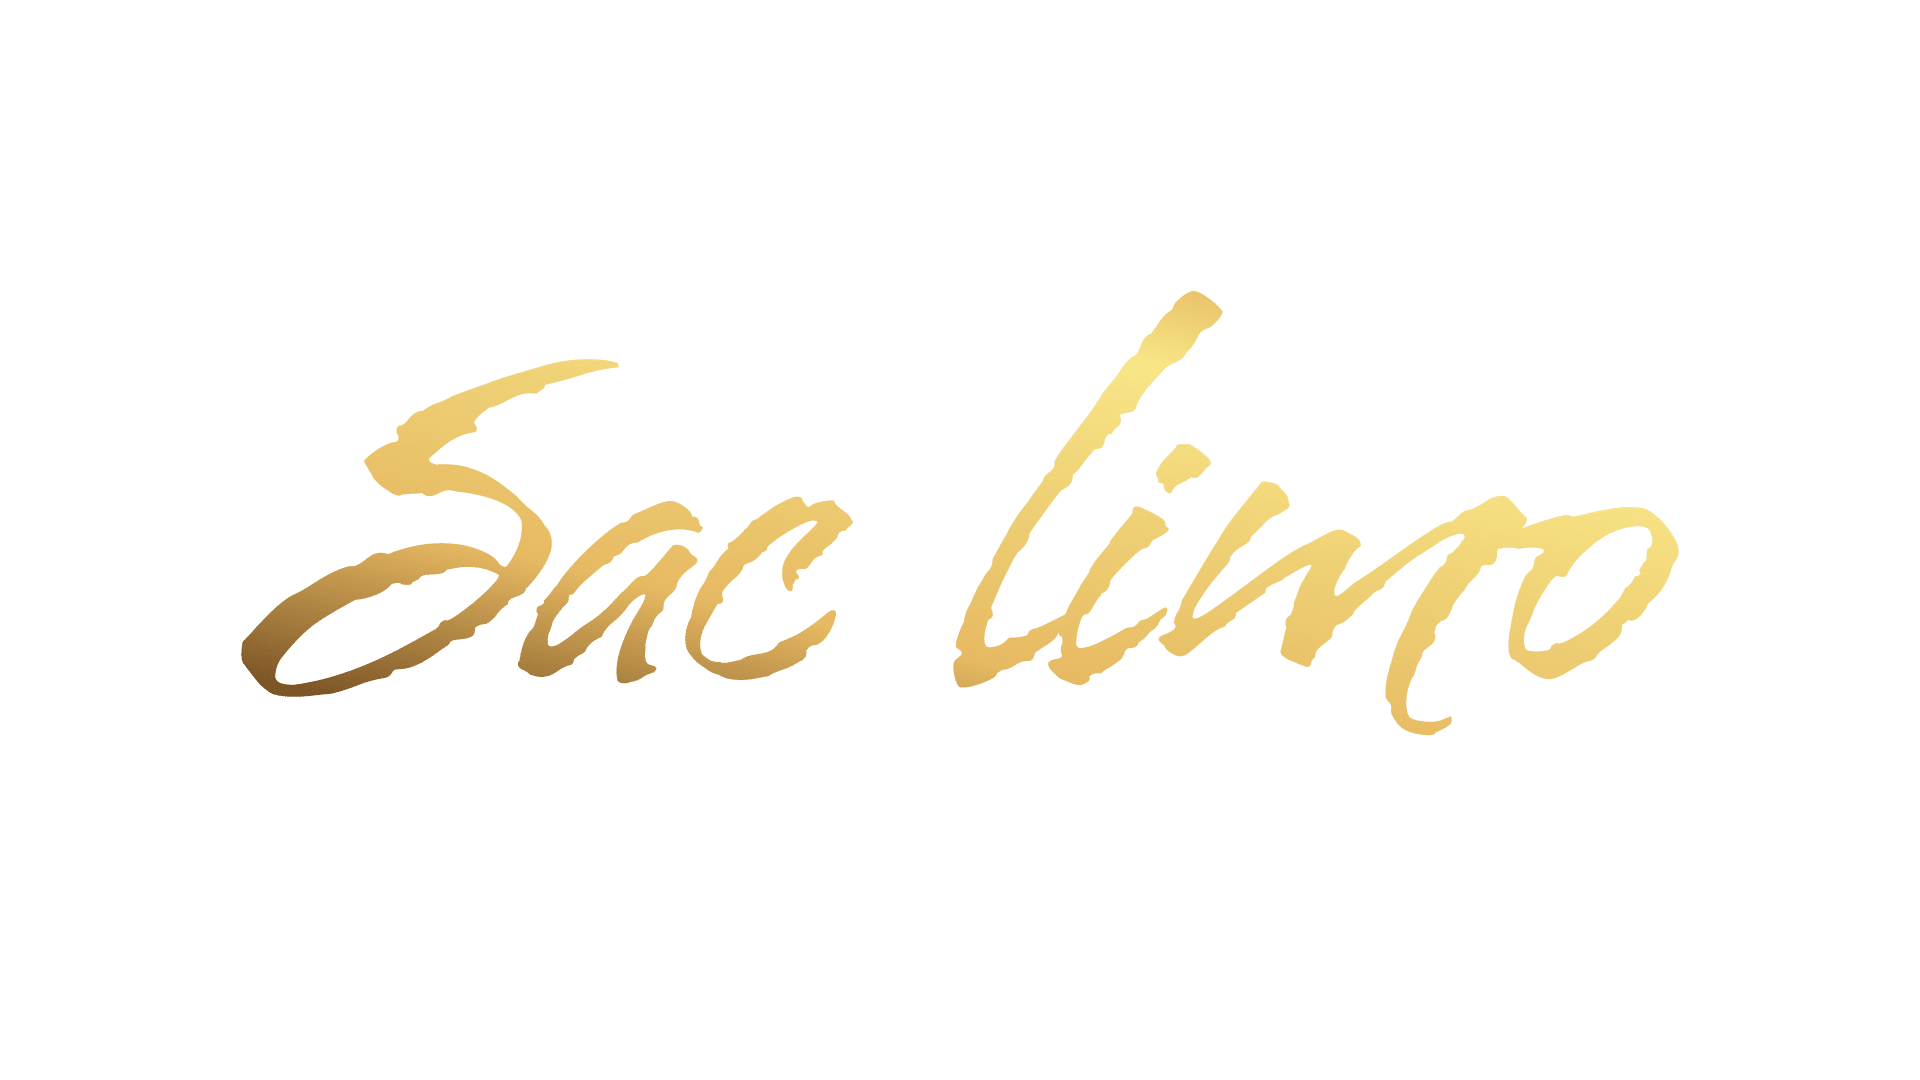 Limousine Logo - Limo Service Sacramento, Limousines, Party Buses: Call 916.446.2252